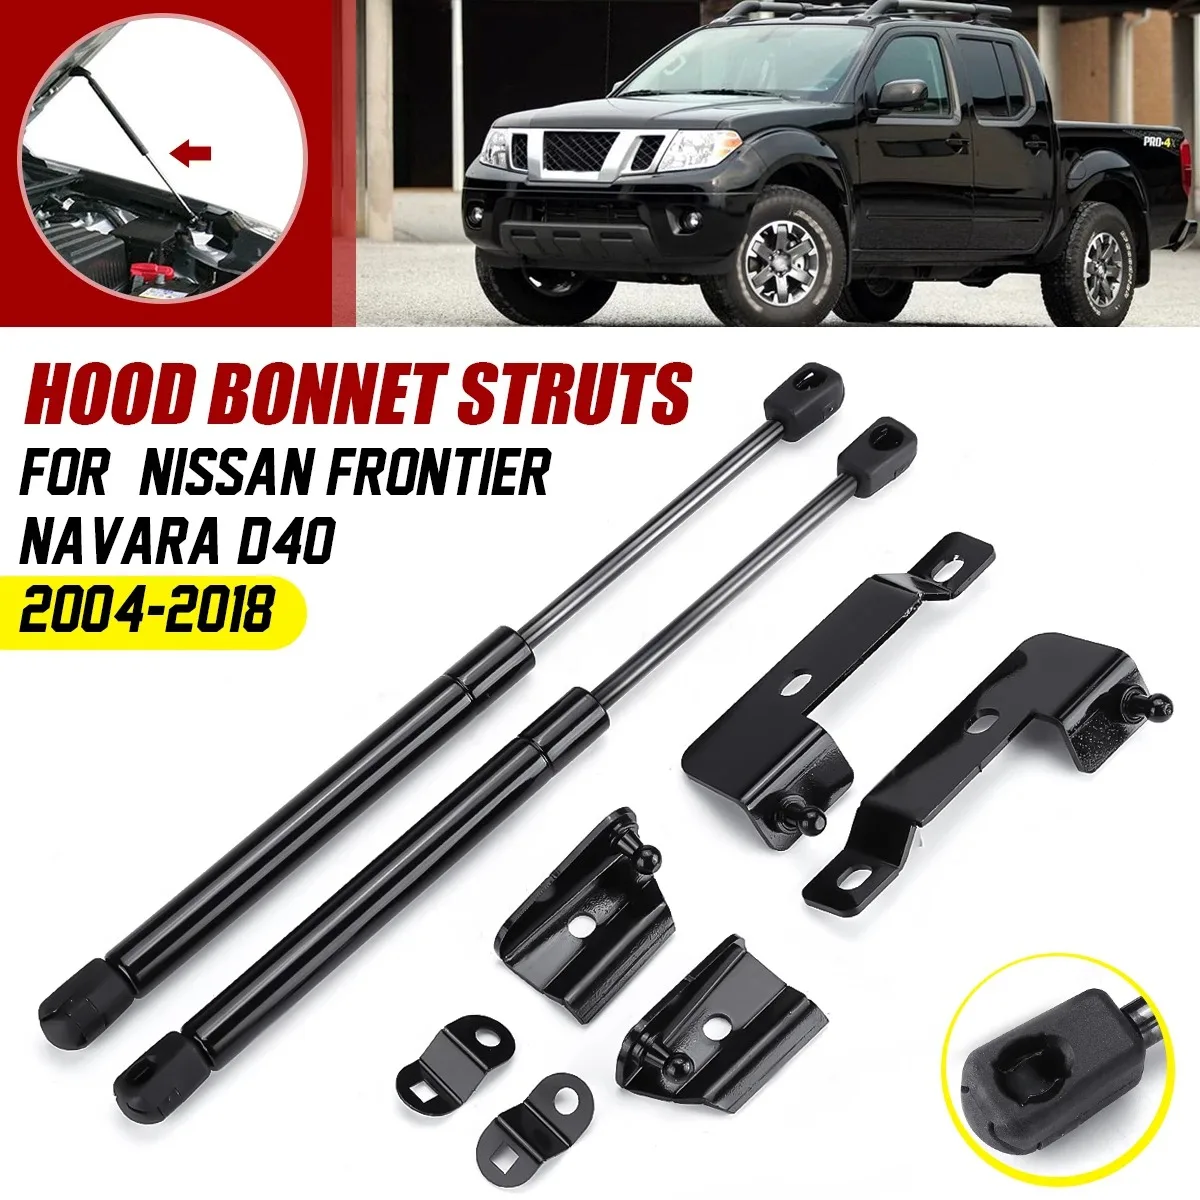 

Front Hood Bonnet Gas Strut Lift Support for Nissan Frontier Navara D40 Frontier Xterra Pathfinder 2004-2018